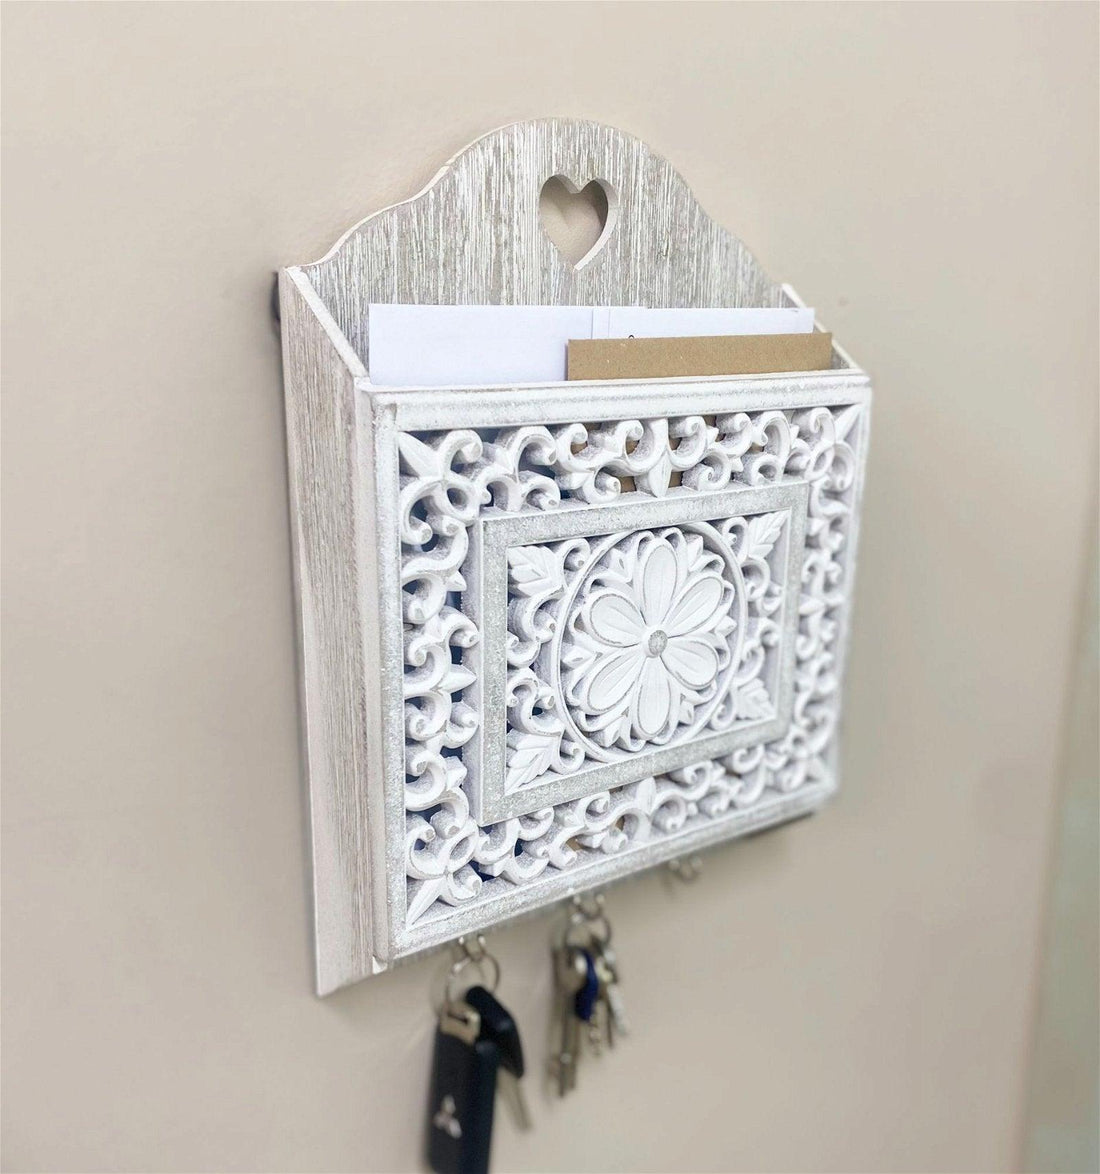 Grey Wooden 3 Hook Key Holder With Cutout Pattern Shelf - £26.99 - Decorative Kitchen Items 